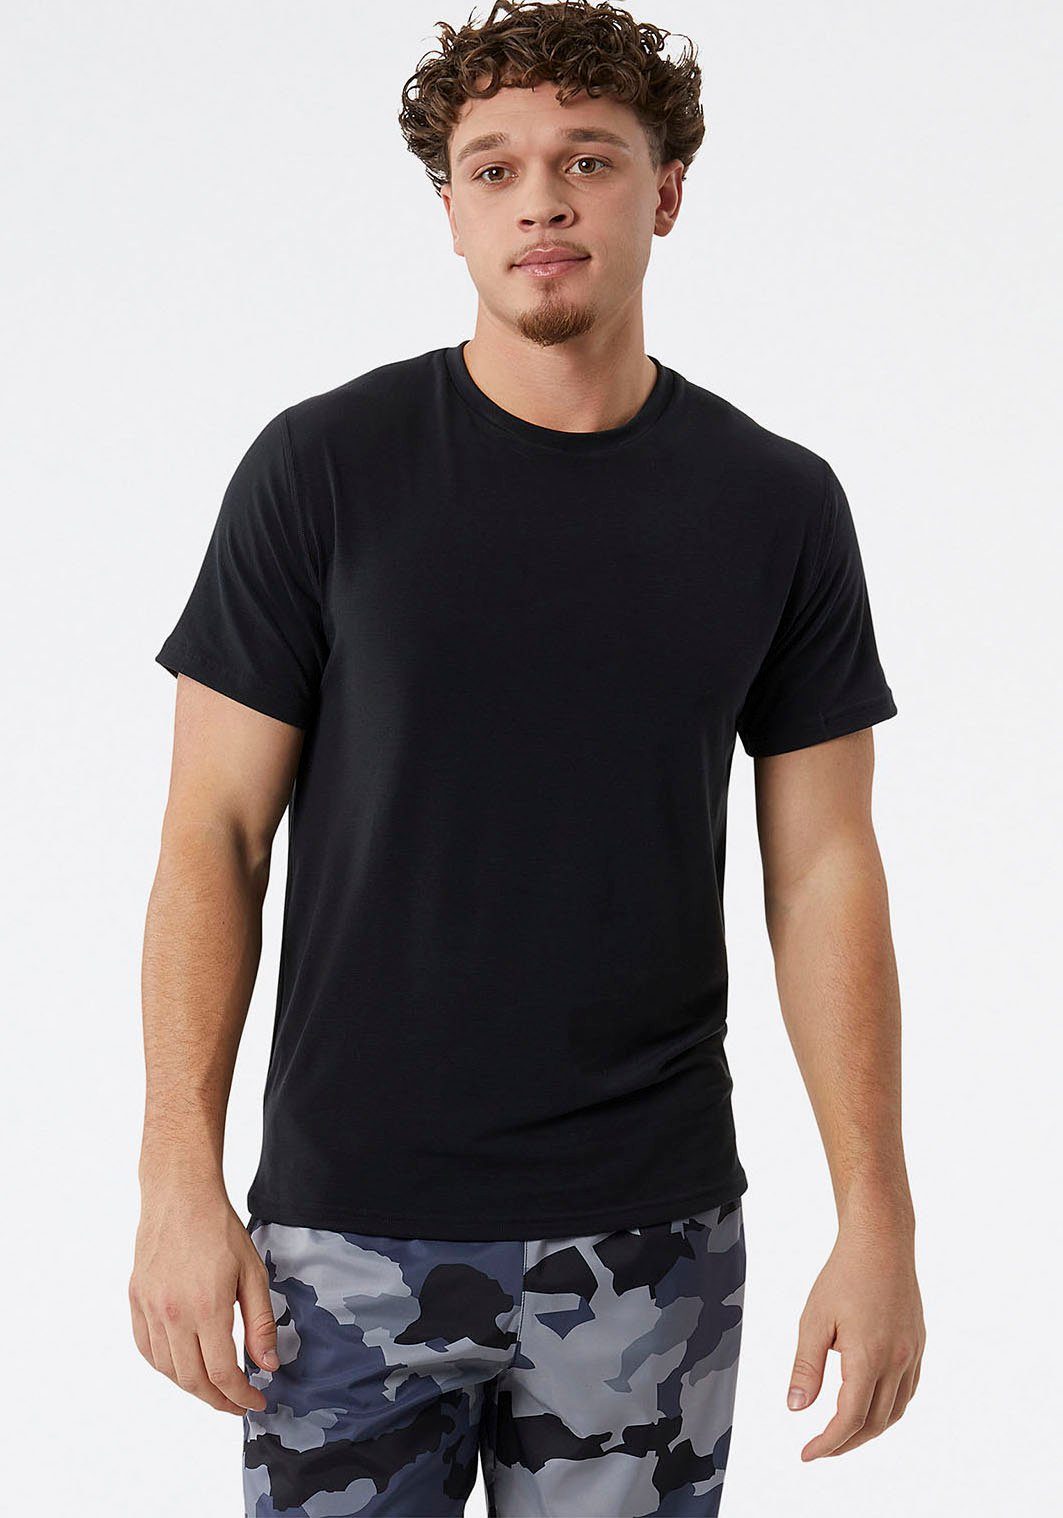 New Balance Black T-Shirt